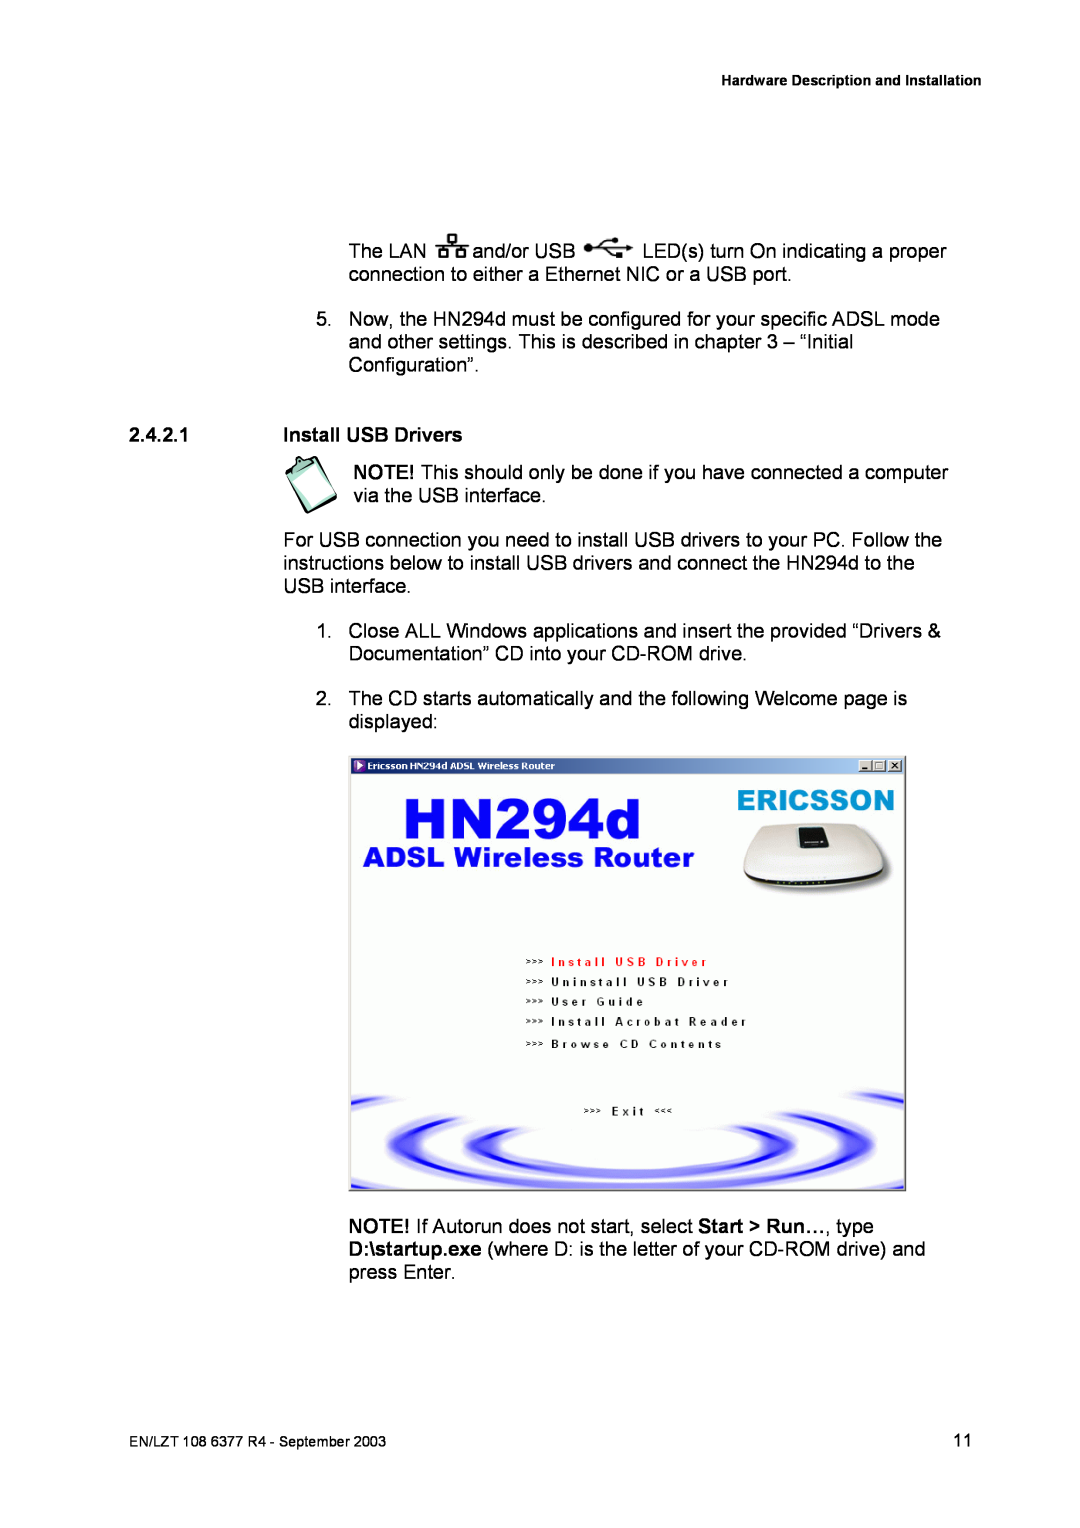 Garmin HN294DP/DI manual Install USB Drivers 